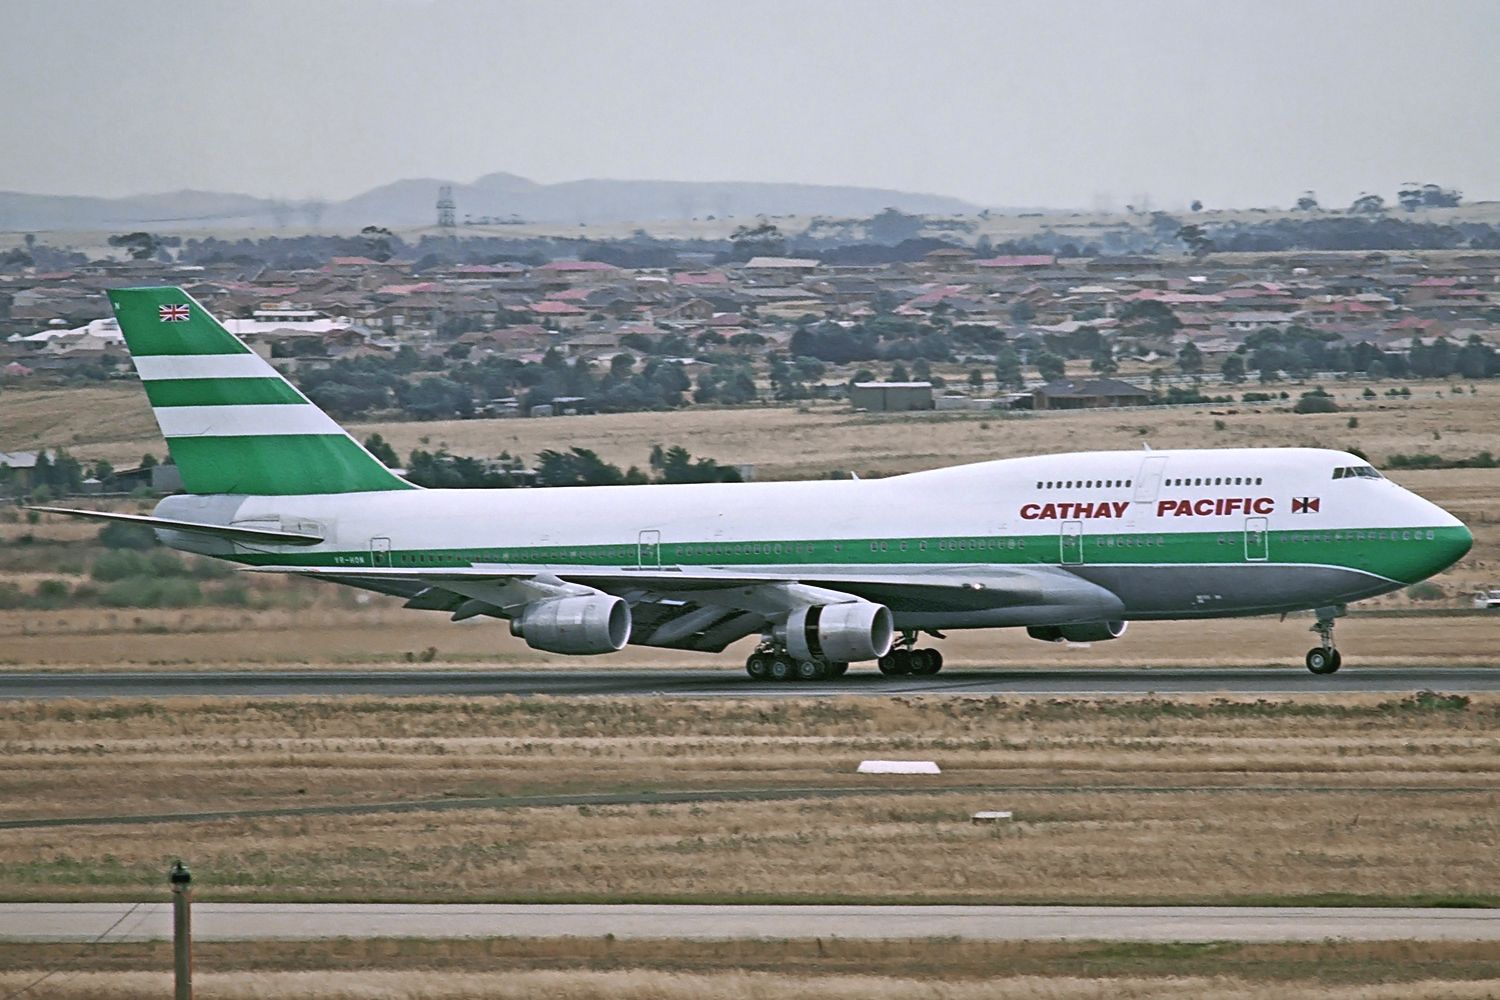 BOEING 747-300 (VR-HON) - Melbourne Tullamarine. Cathay Pacific flight landing on Rw 34, December 31, 1989.